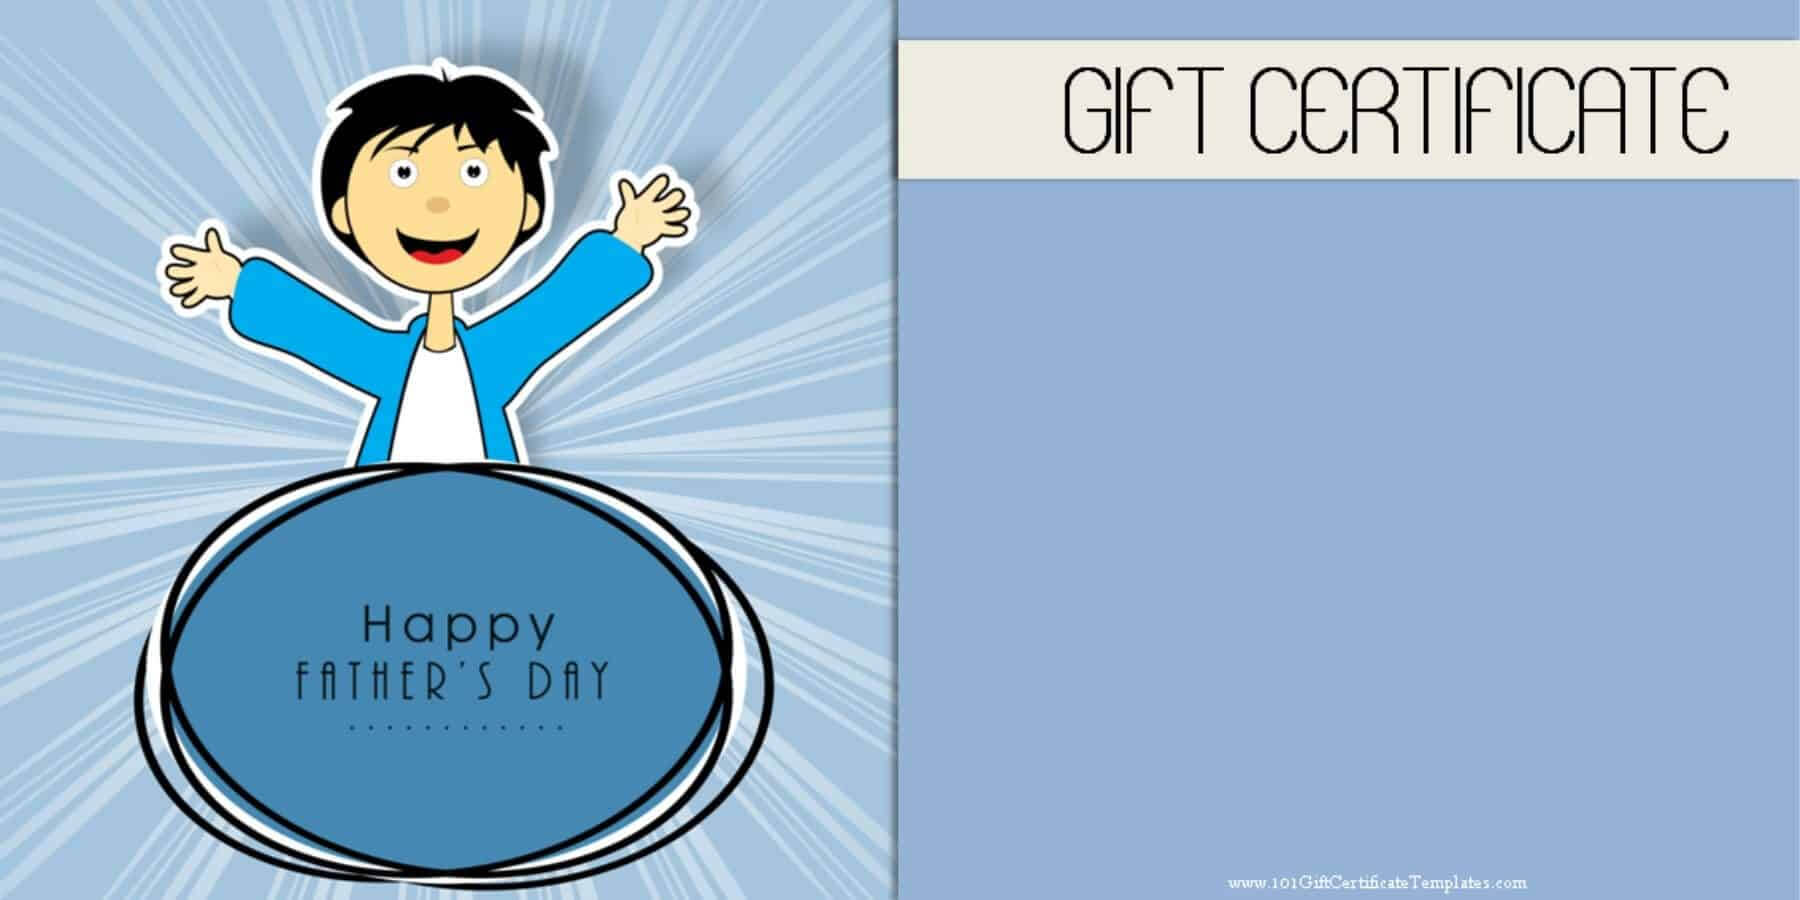 Spa Day Gift Certificate Template ] – Avant Salon Day Spa Throughout Spa Day Gift Certificate Template